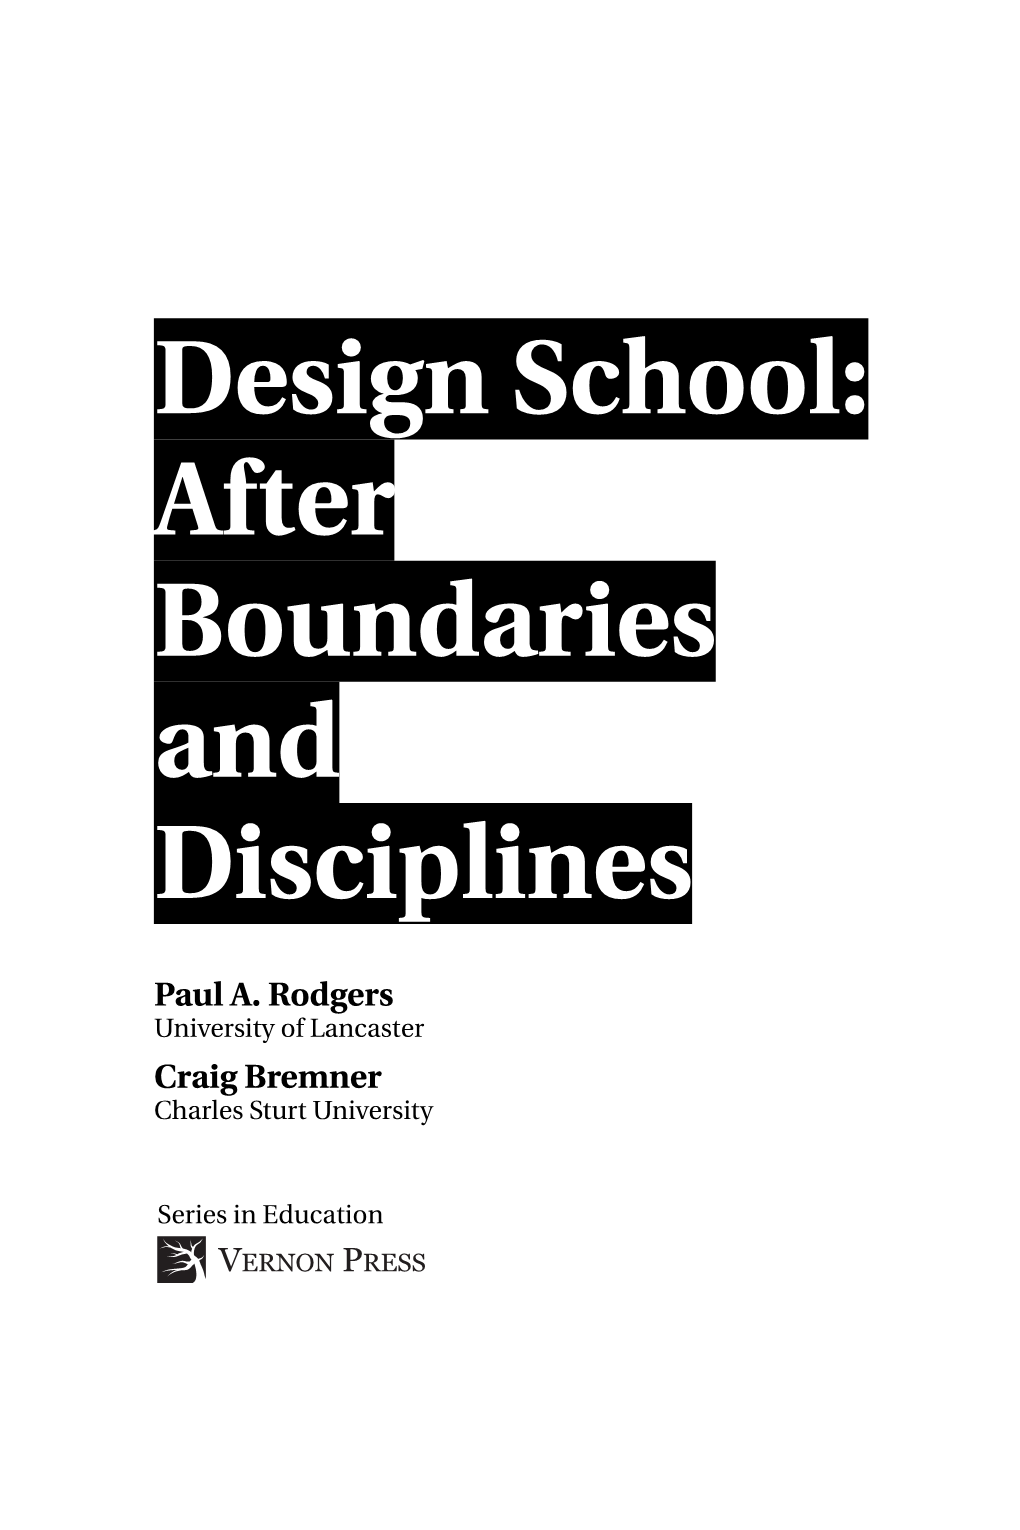 Design School: After Boundaries and Disciplines